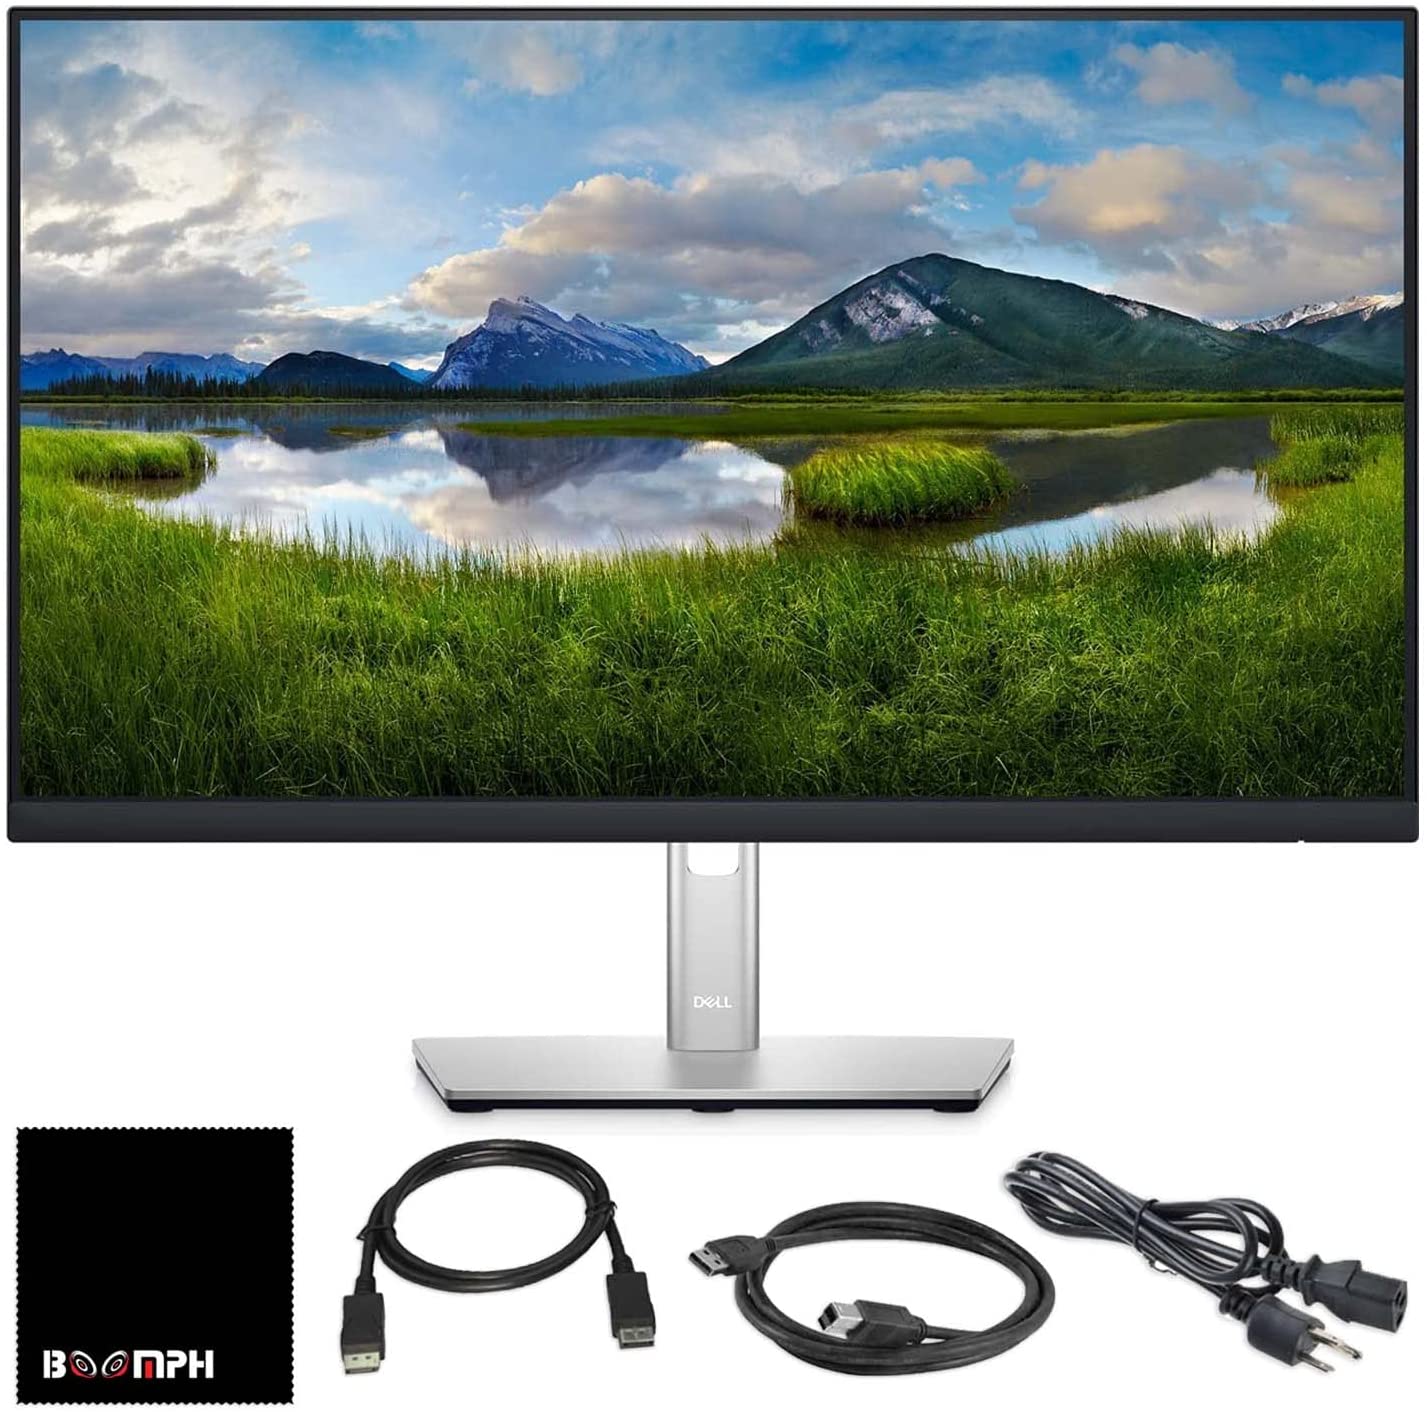 Dell UltraSharp U3219Q (Best 4K Monitors For Photo Editing):